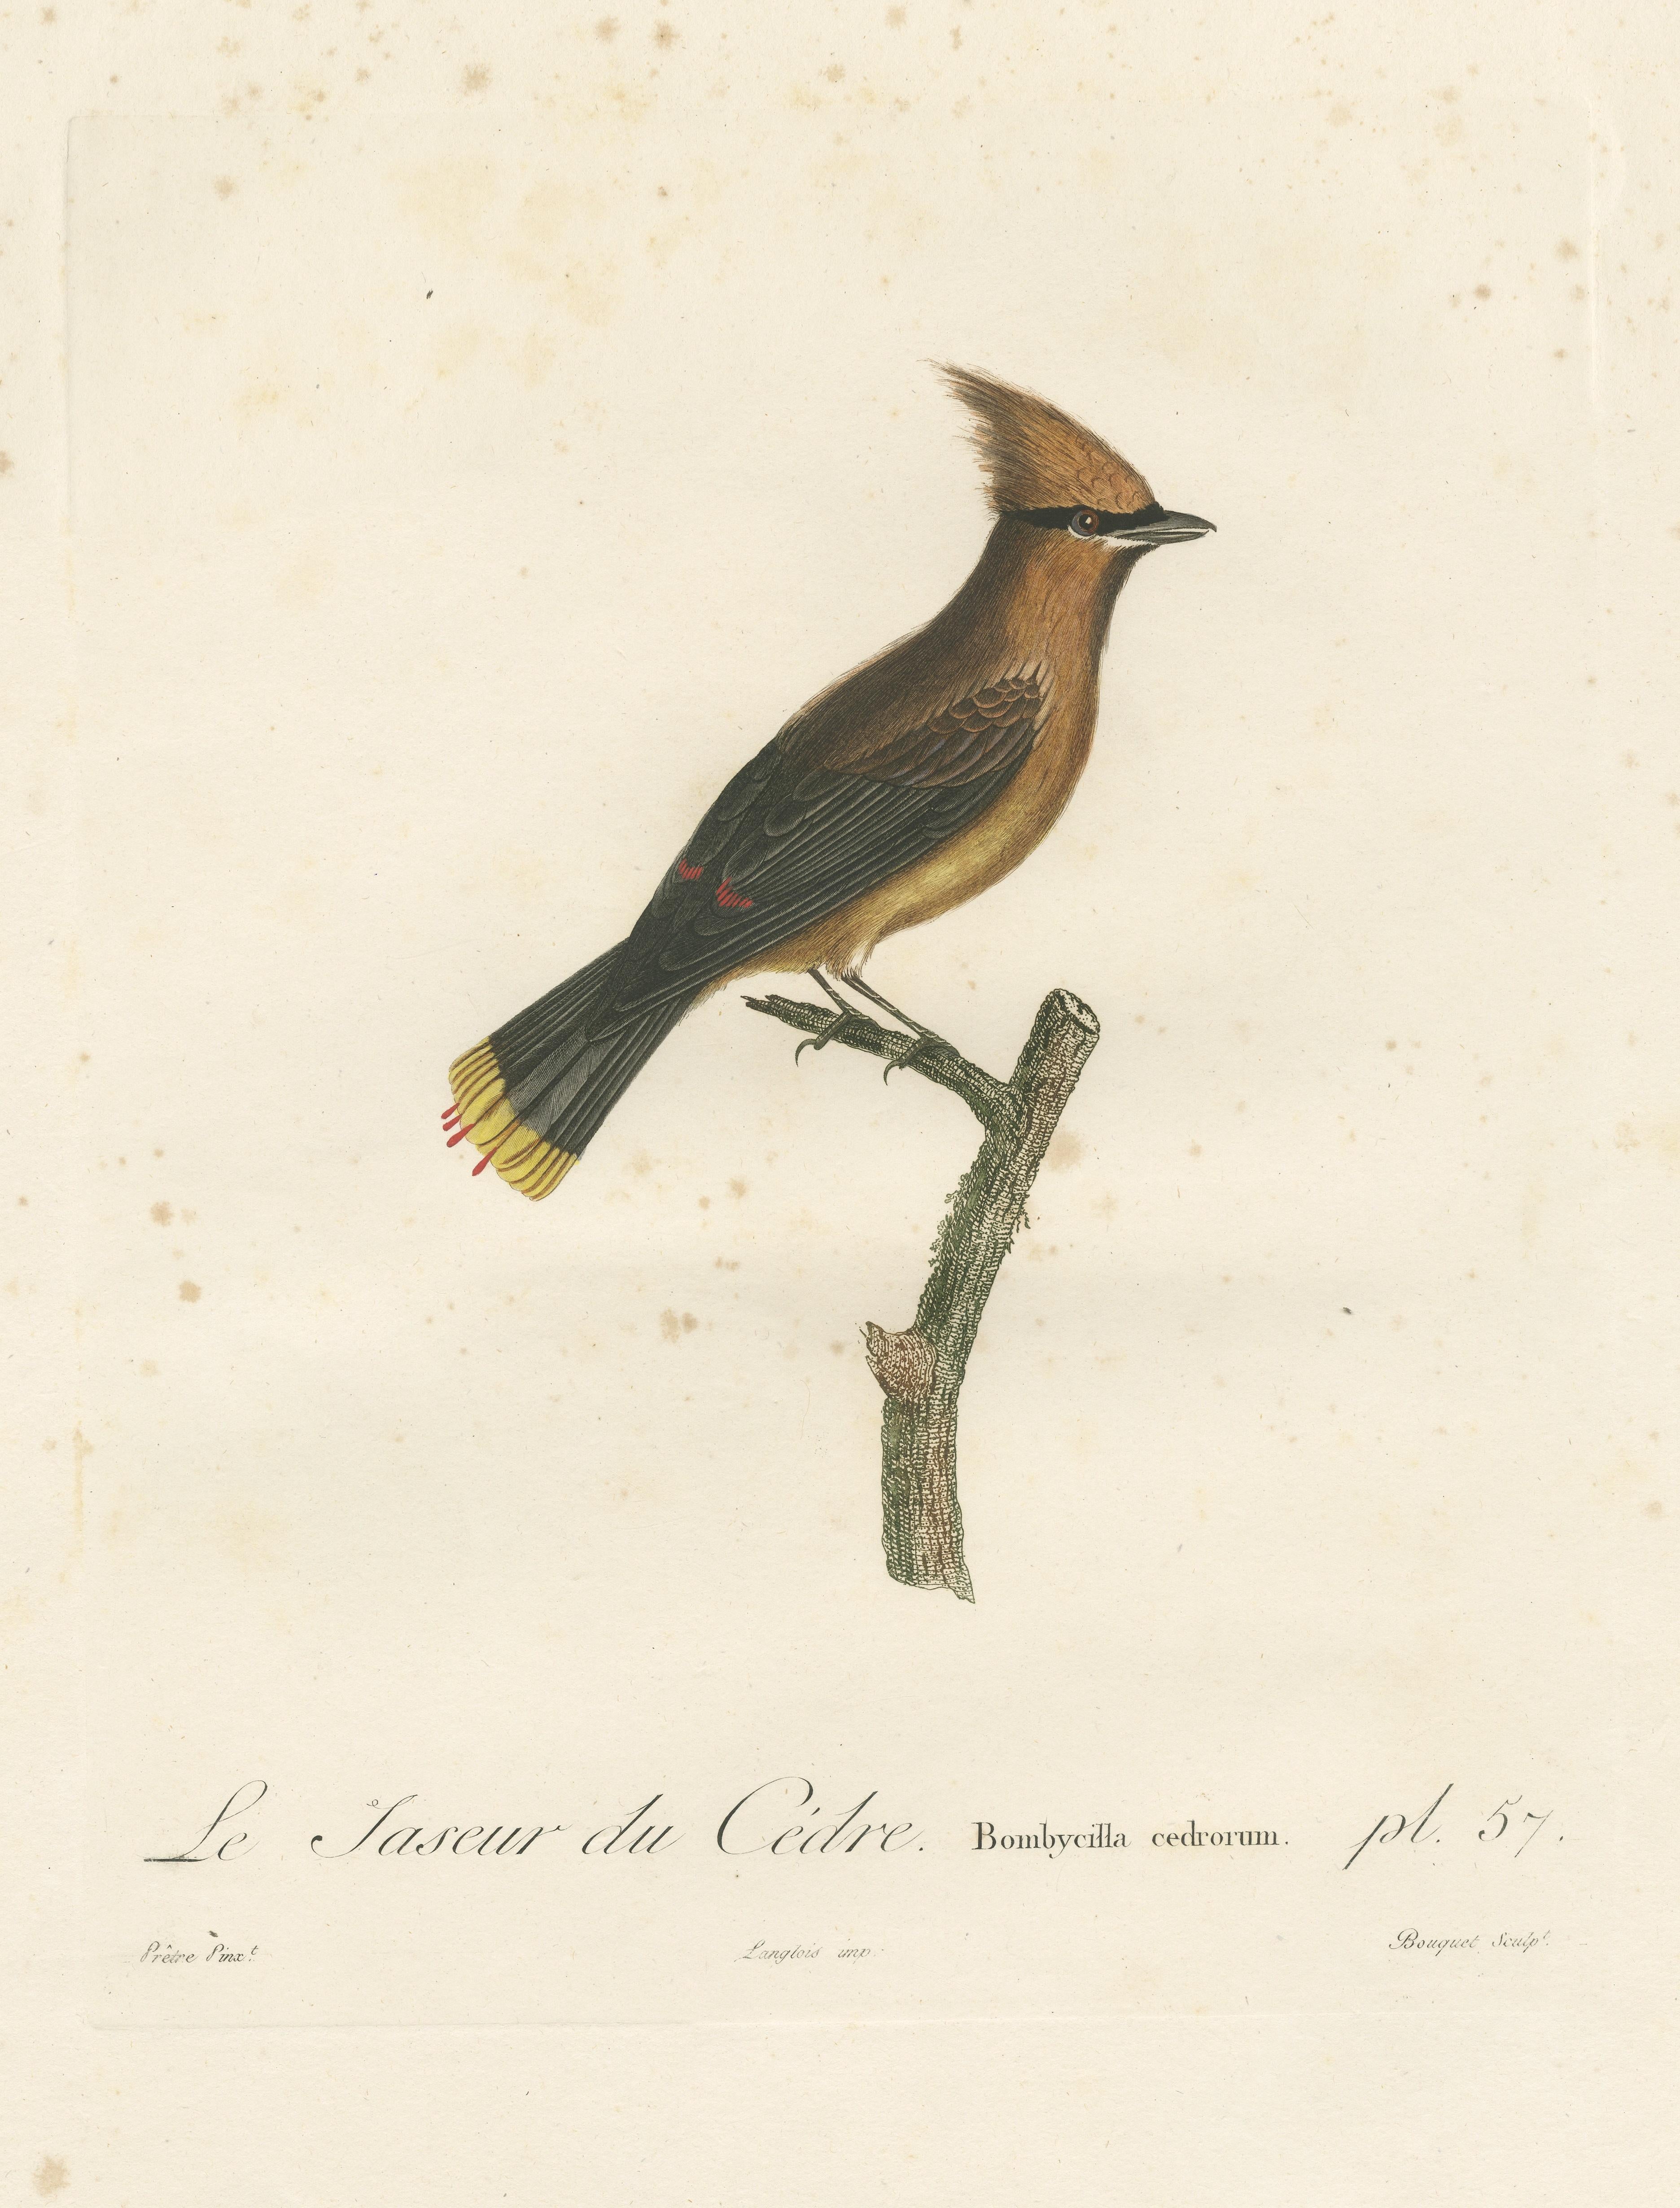 19th Century 1807 Cedar Waxwing Print - Original Handcolored Bird Illustration by Vieillot For Sale